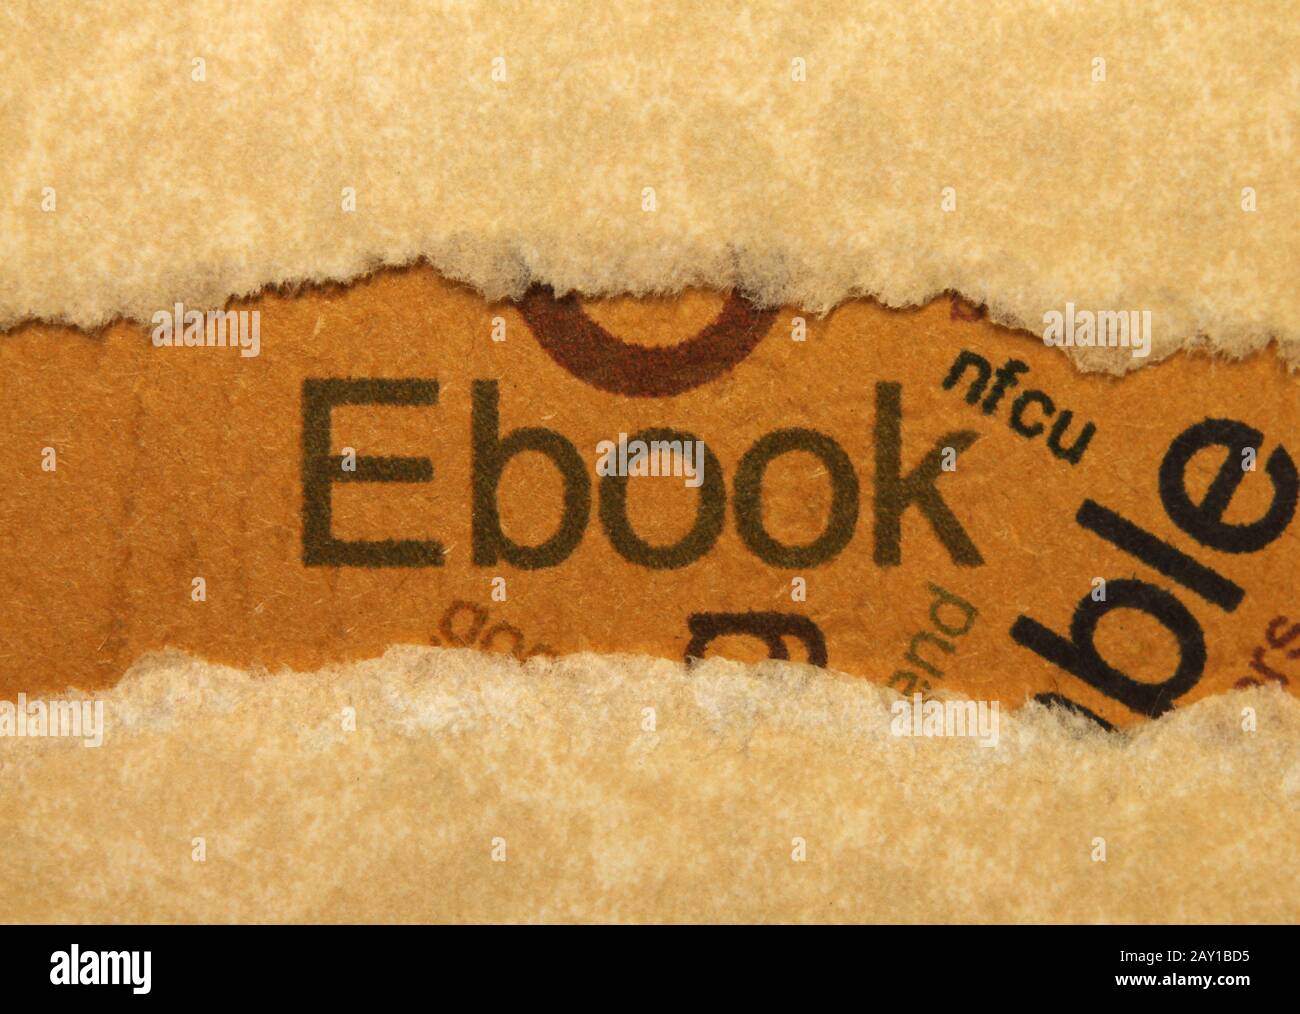 E-book Stock Photo